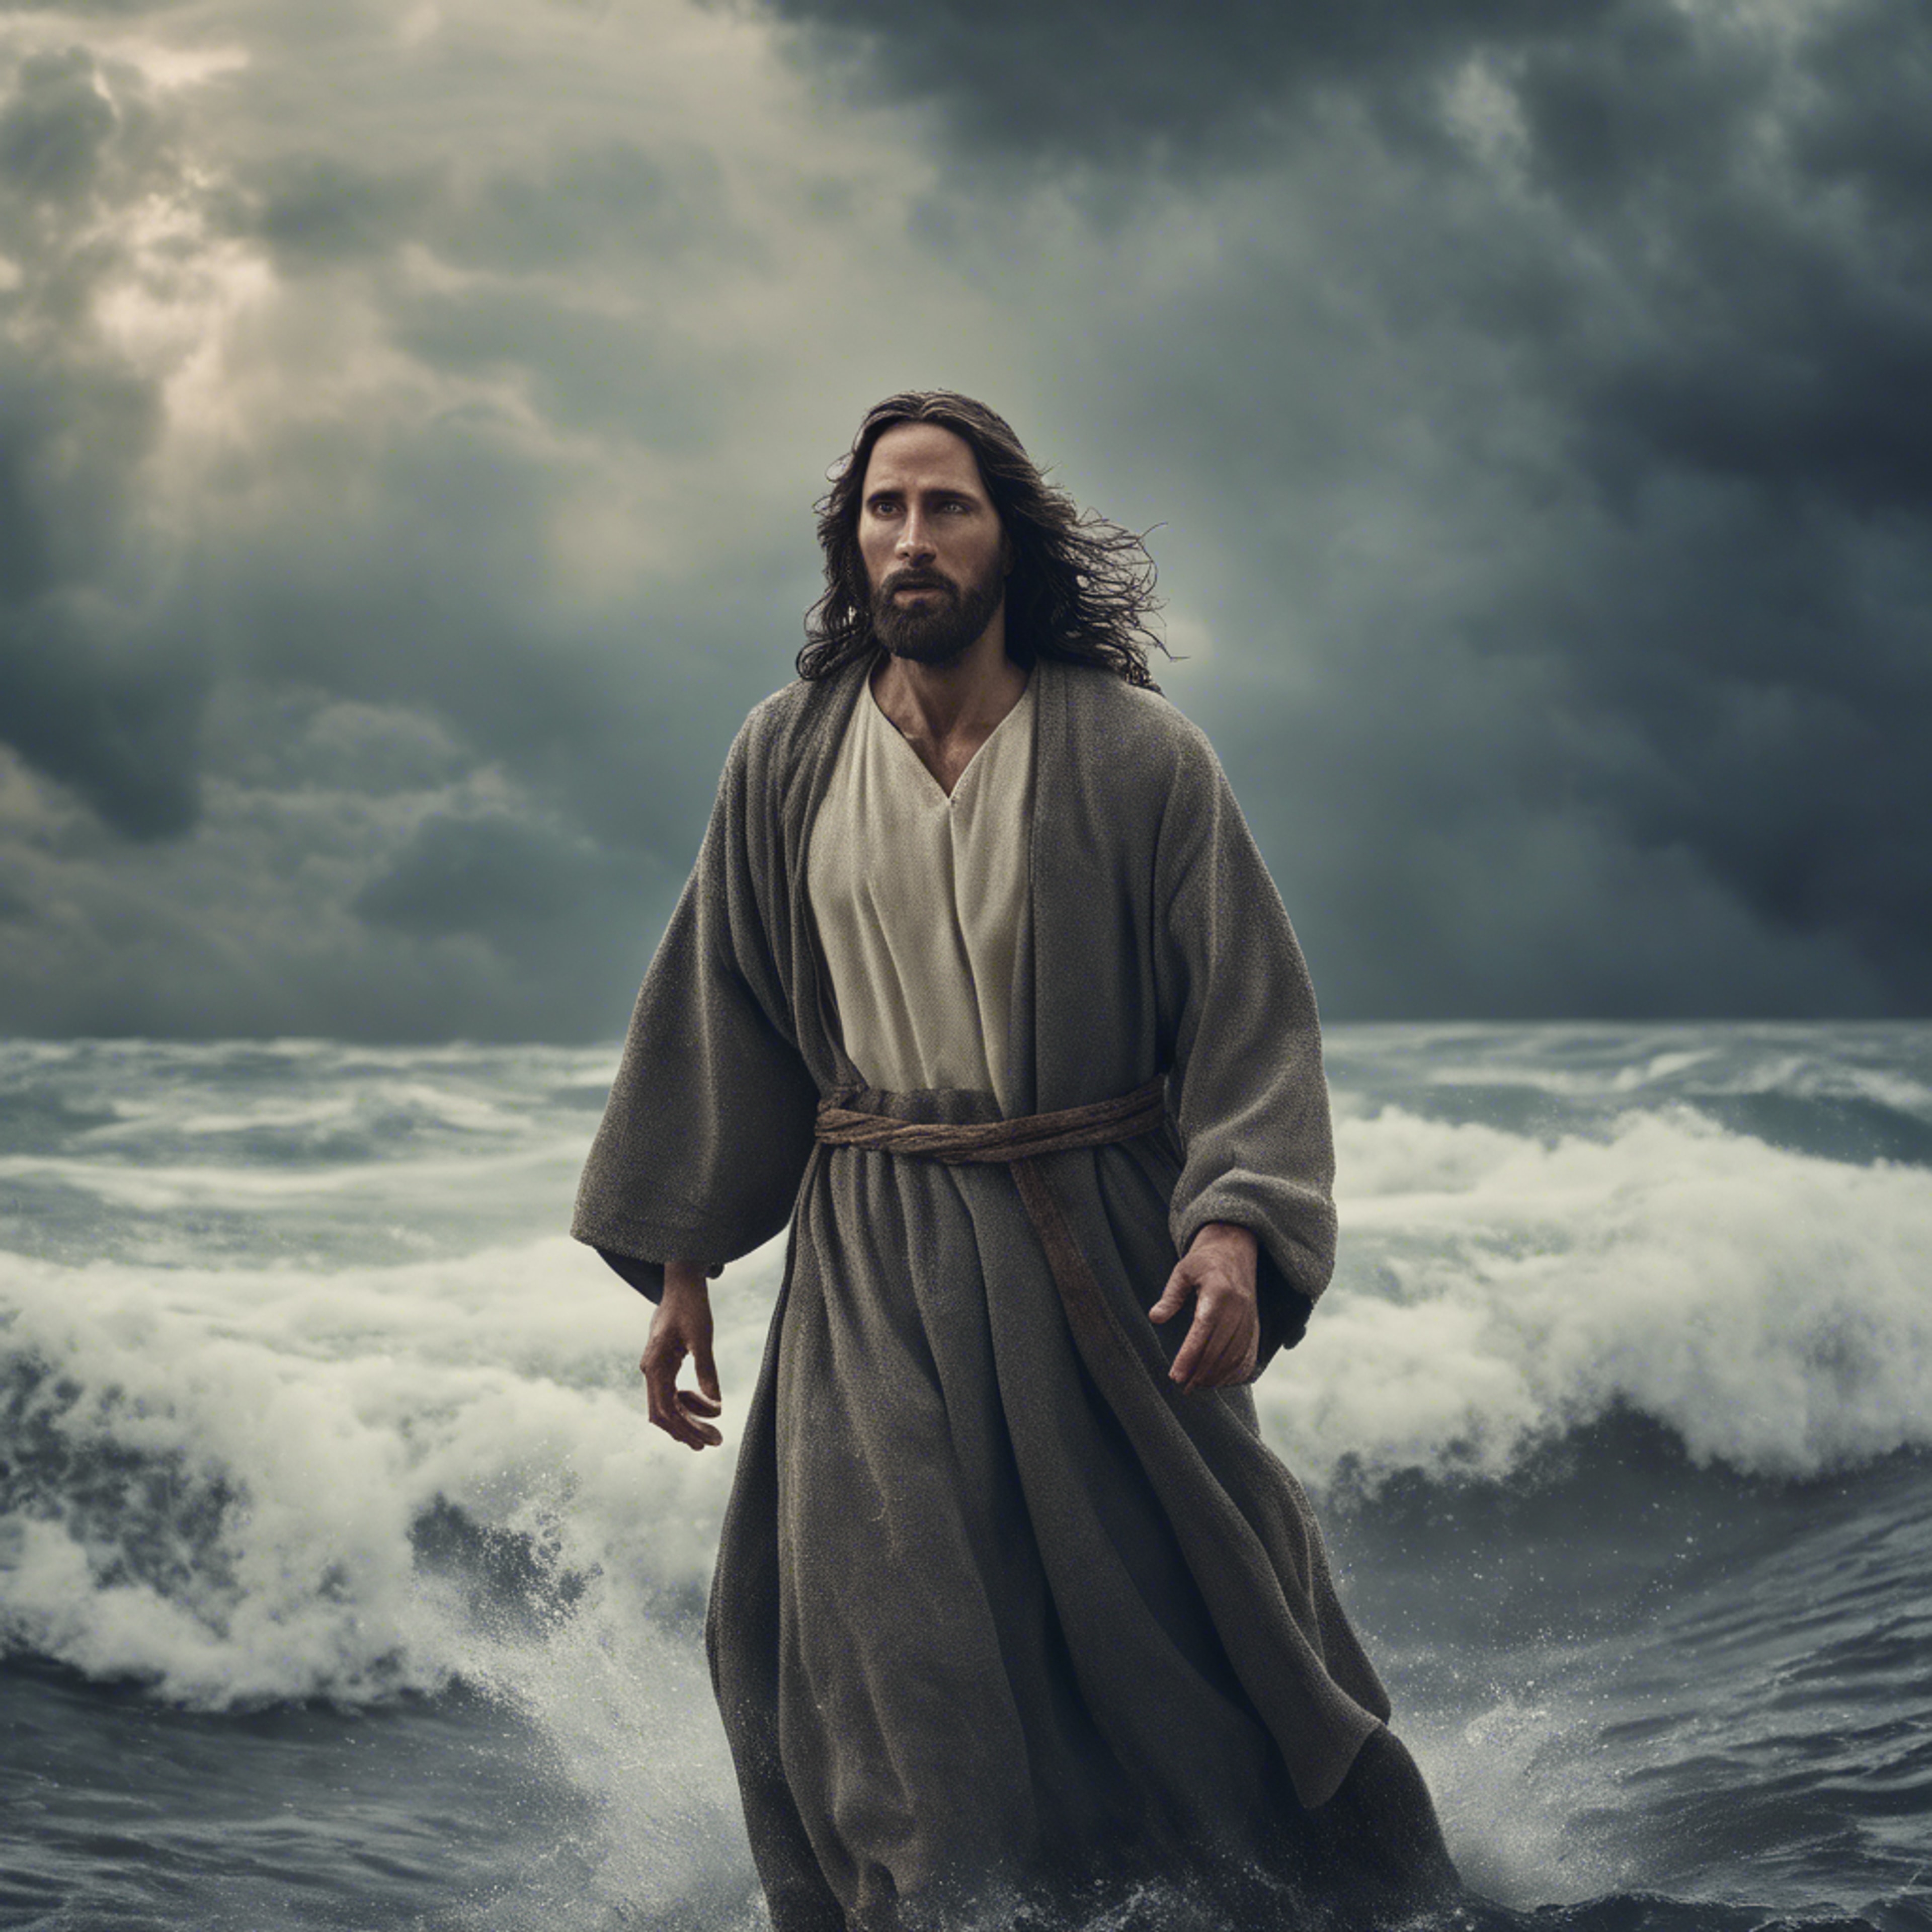 Jesus Christ calmly walking across a stormy sea under a dramatic, cloudy sky. Sfondo[40d9c306725247569090]